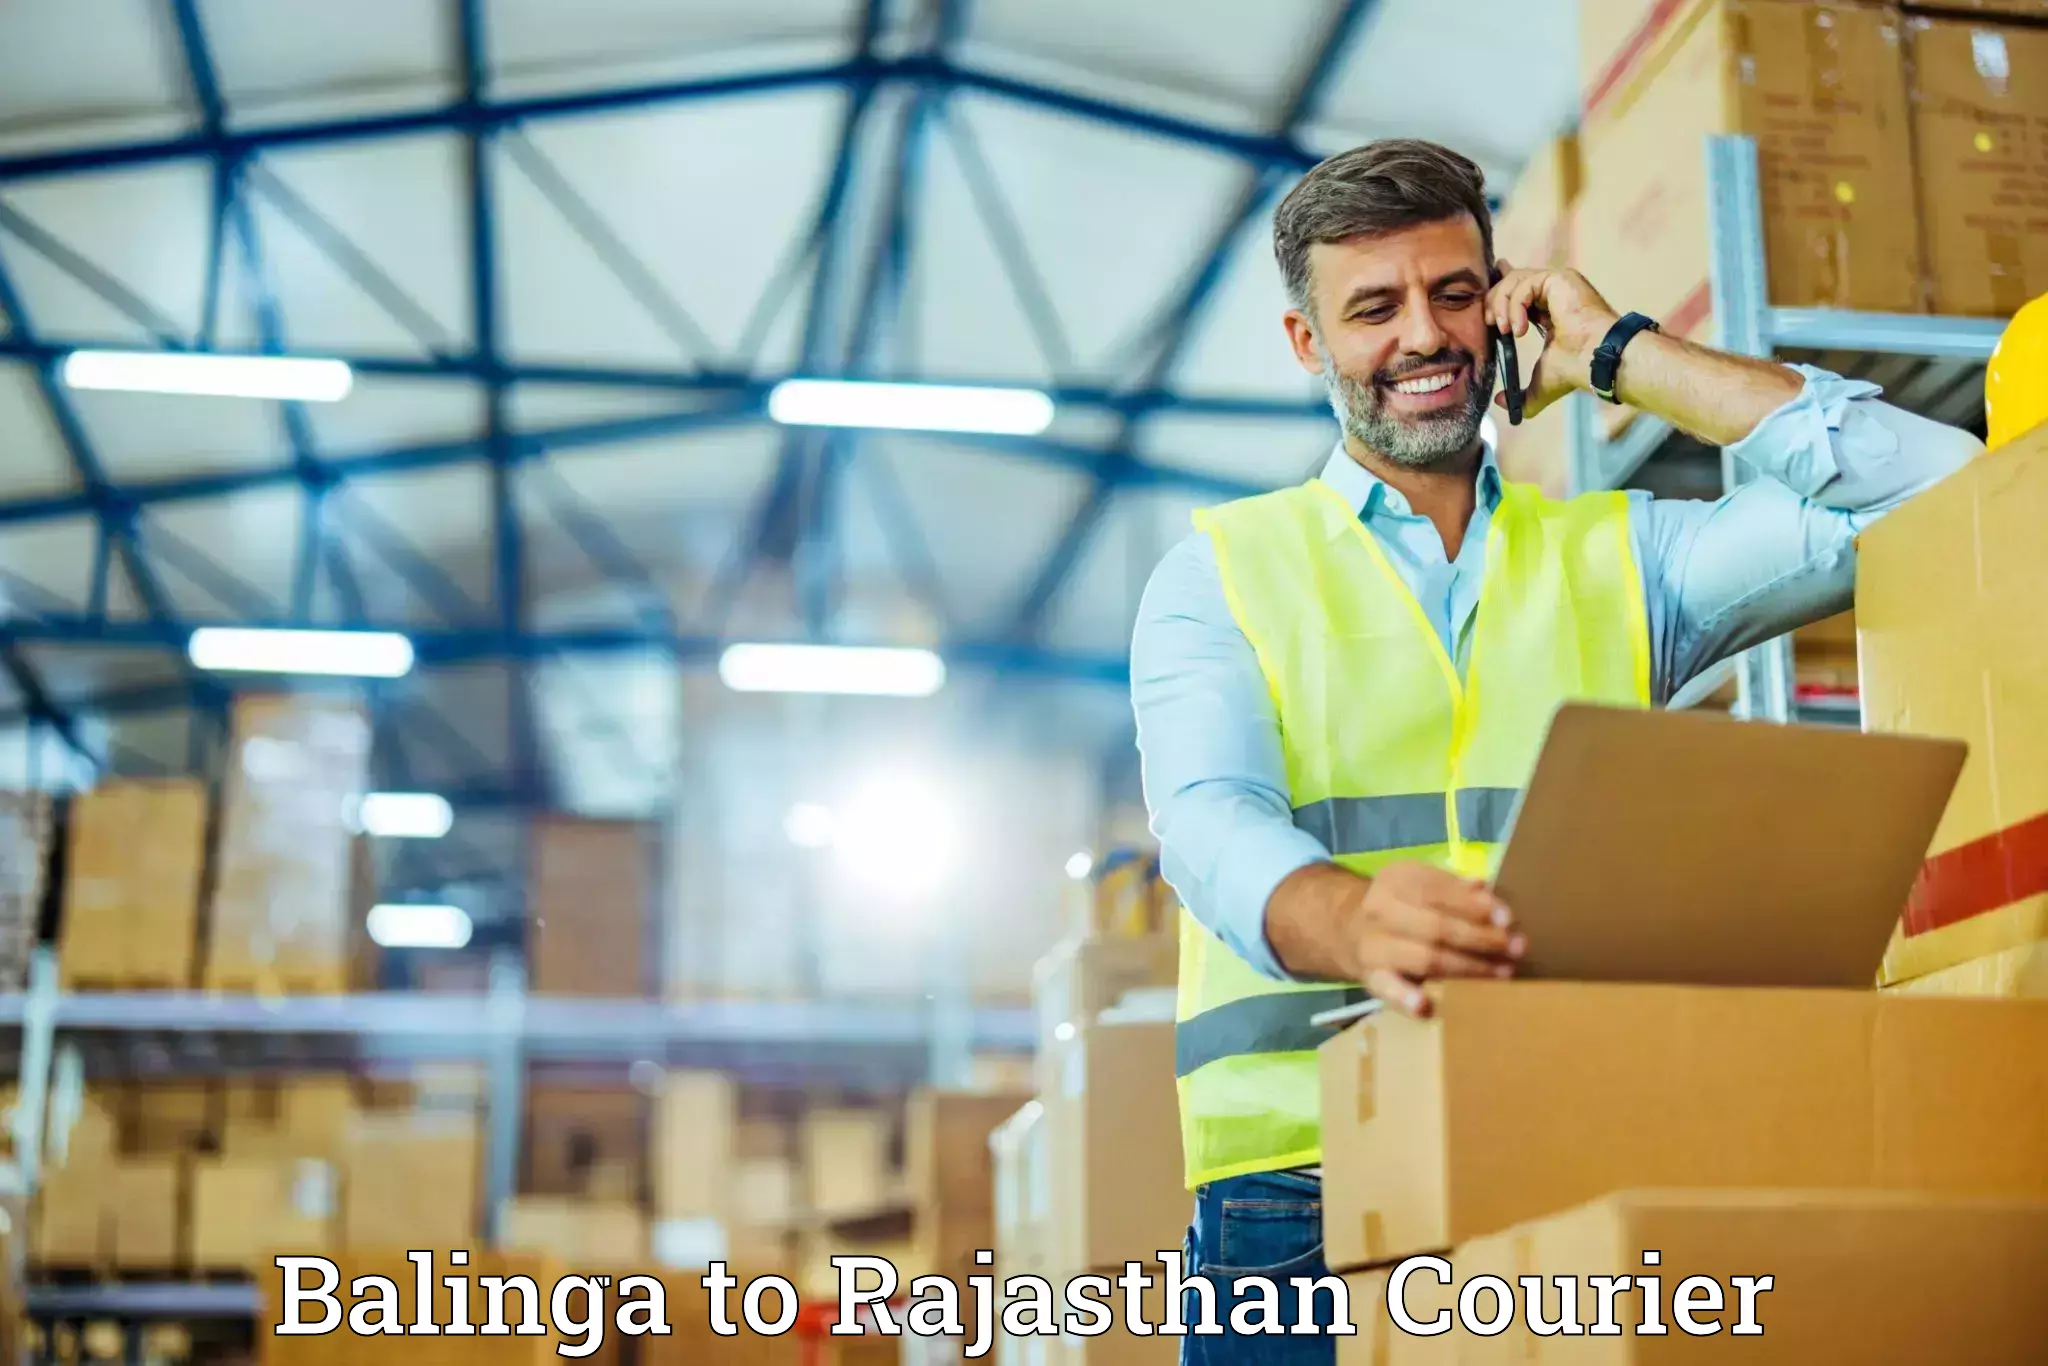 Professional moving company Balinga to Pali